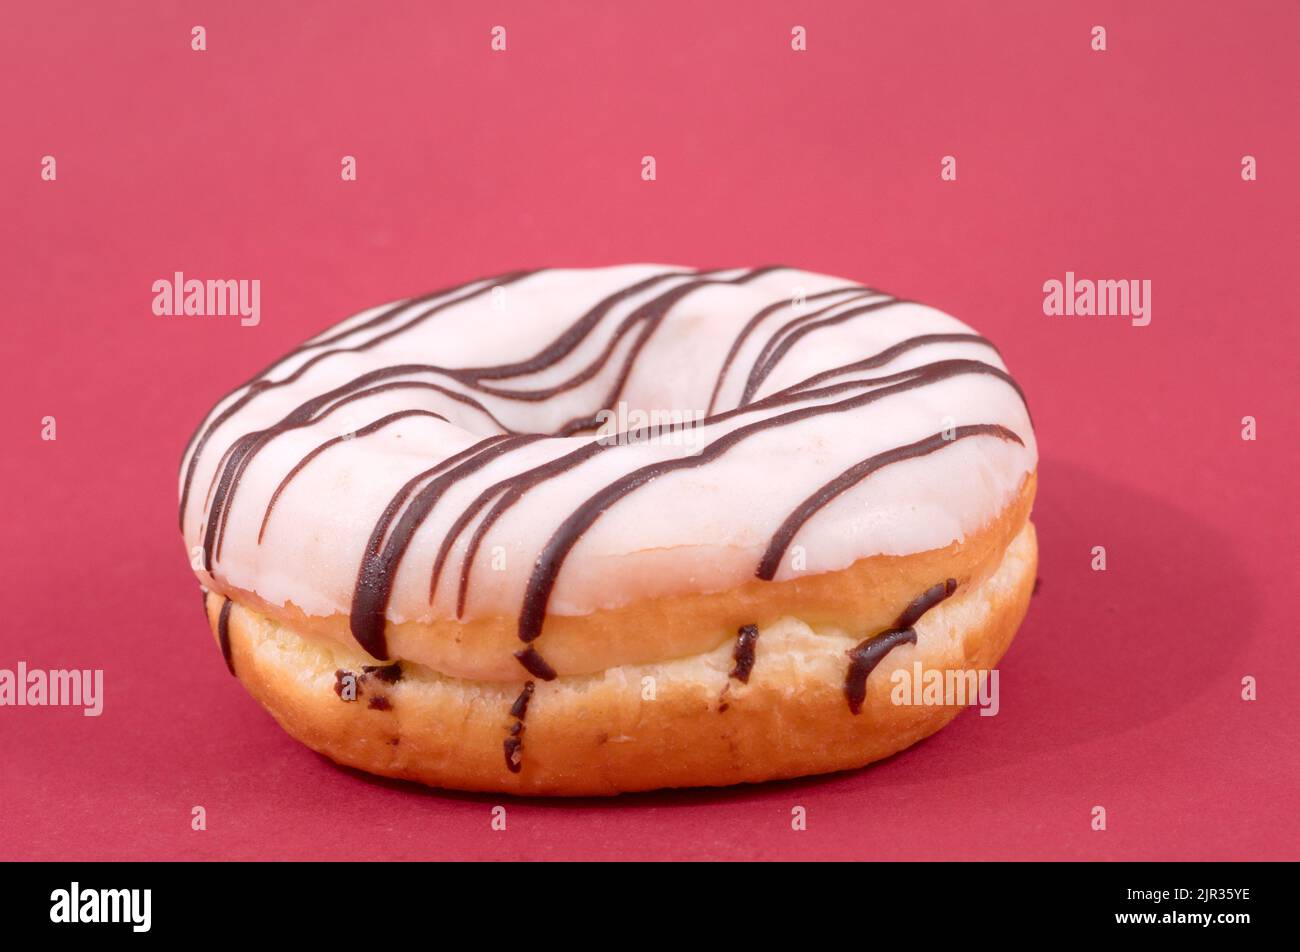 Glazed sweet doughnut on red background Stock Photo